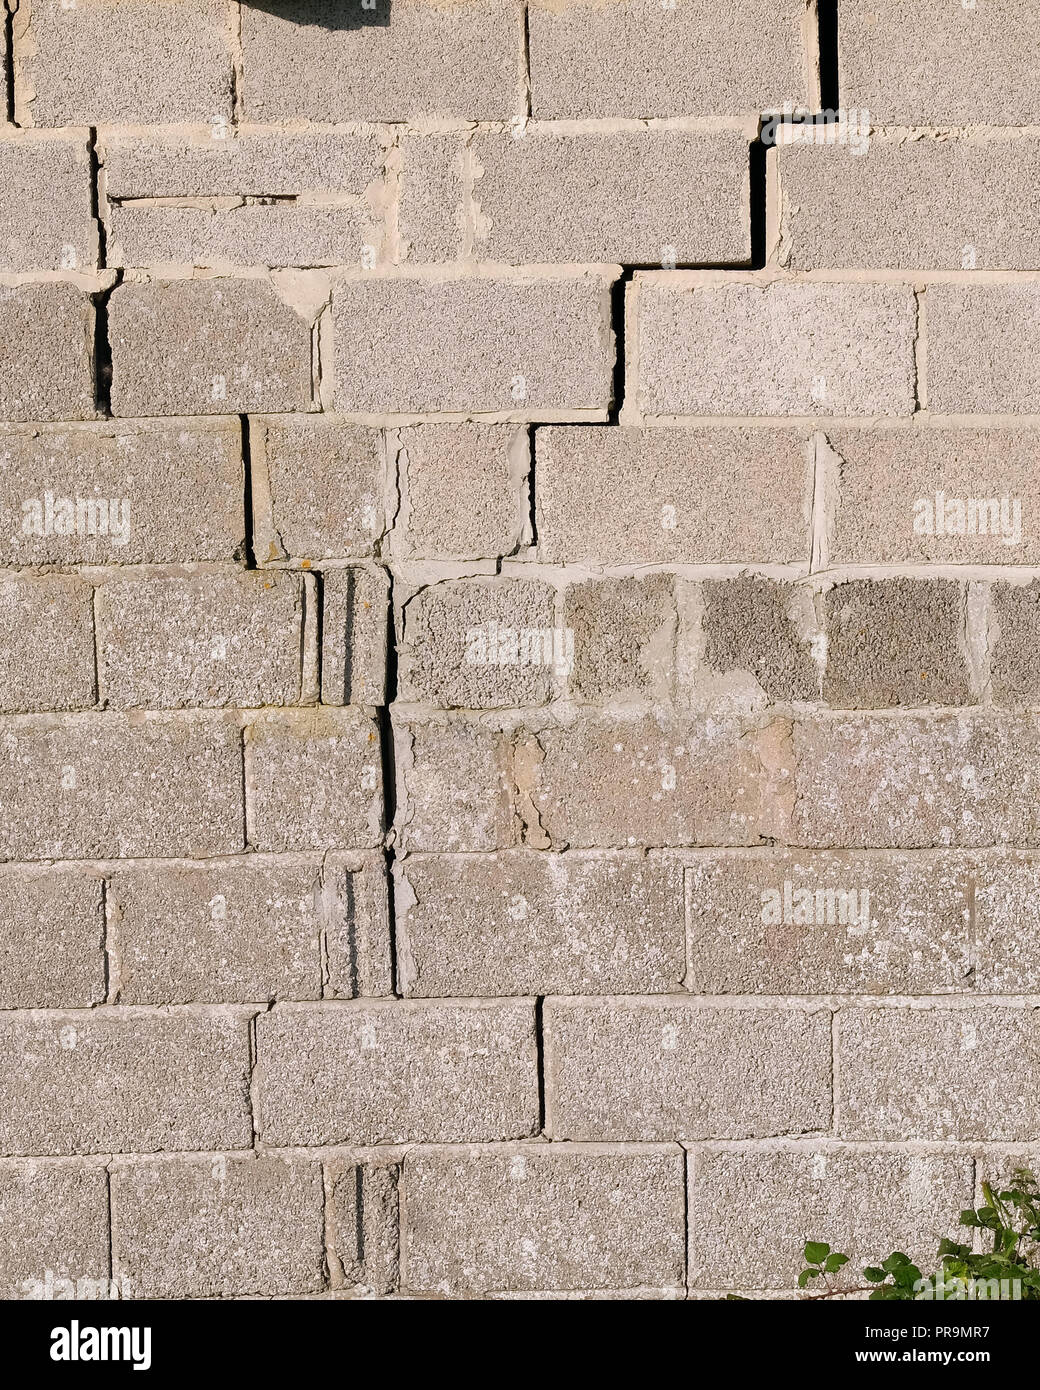 September 2018 -  Failing blockwork wall cracking structure Stock Photo